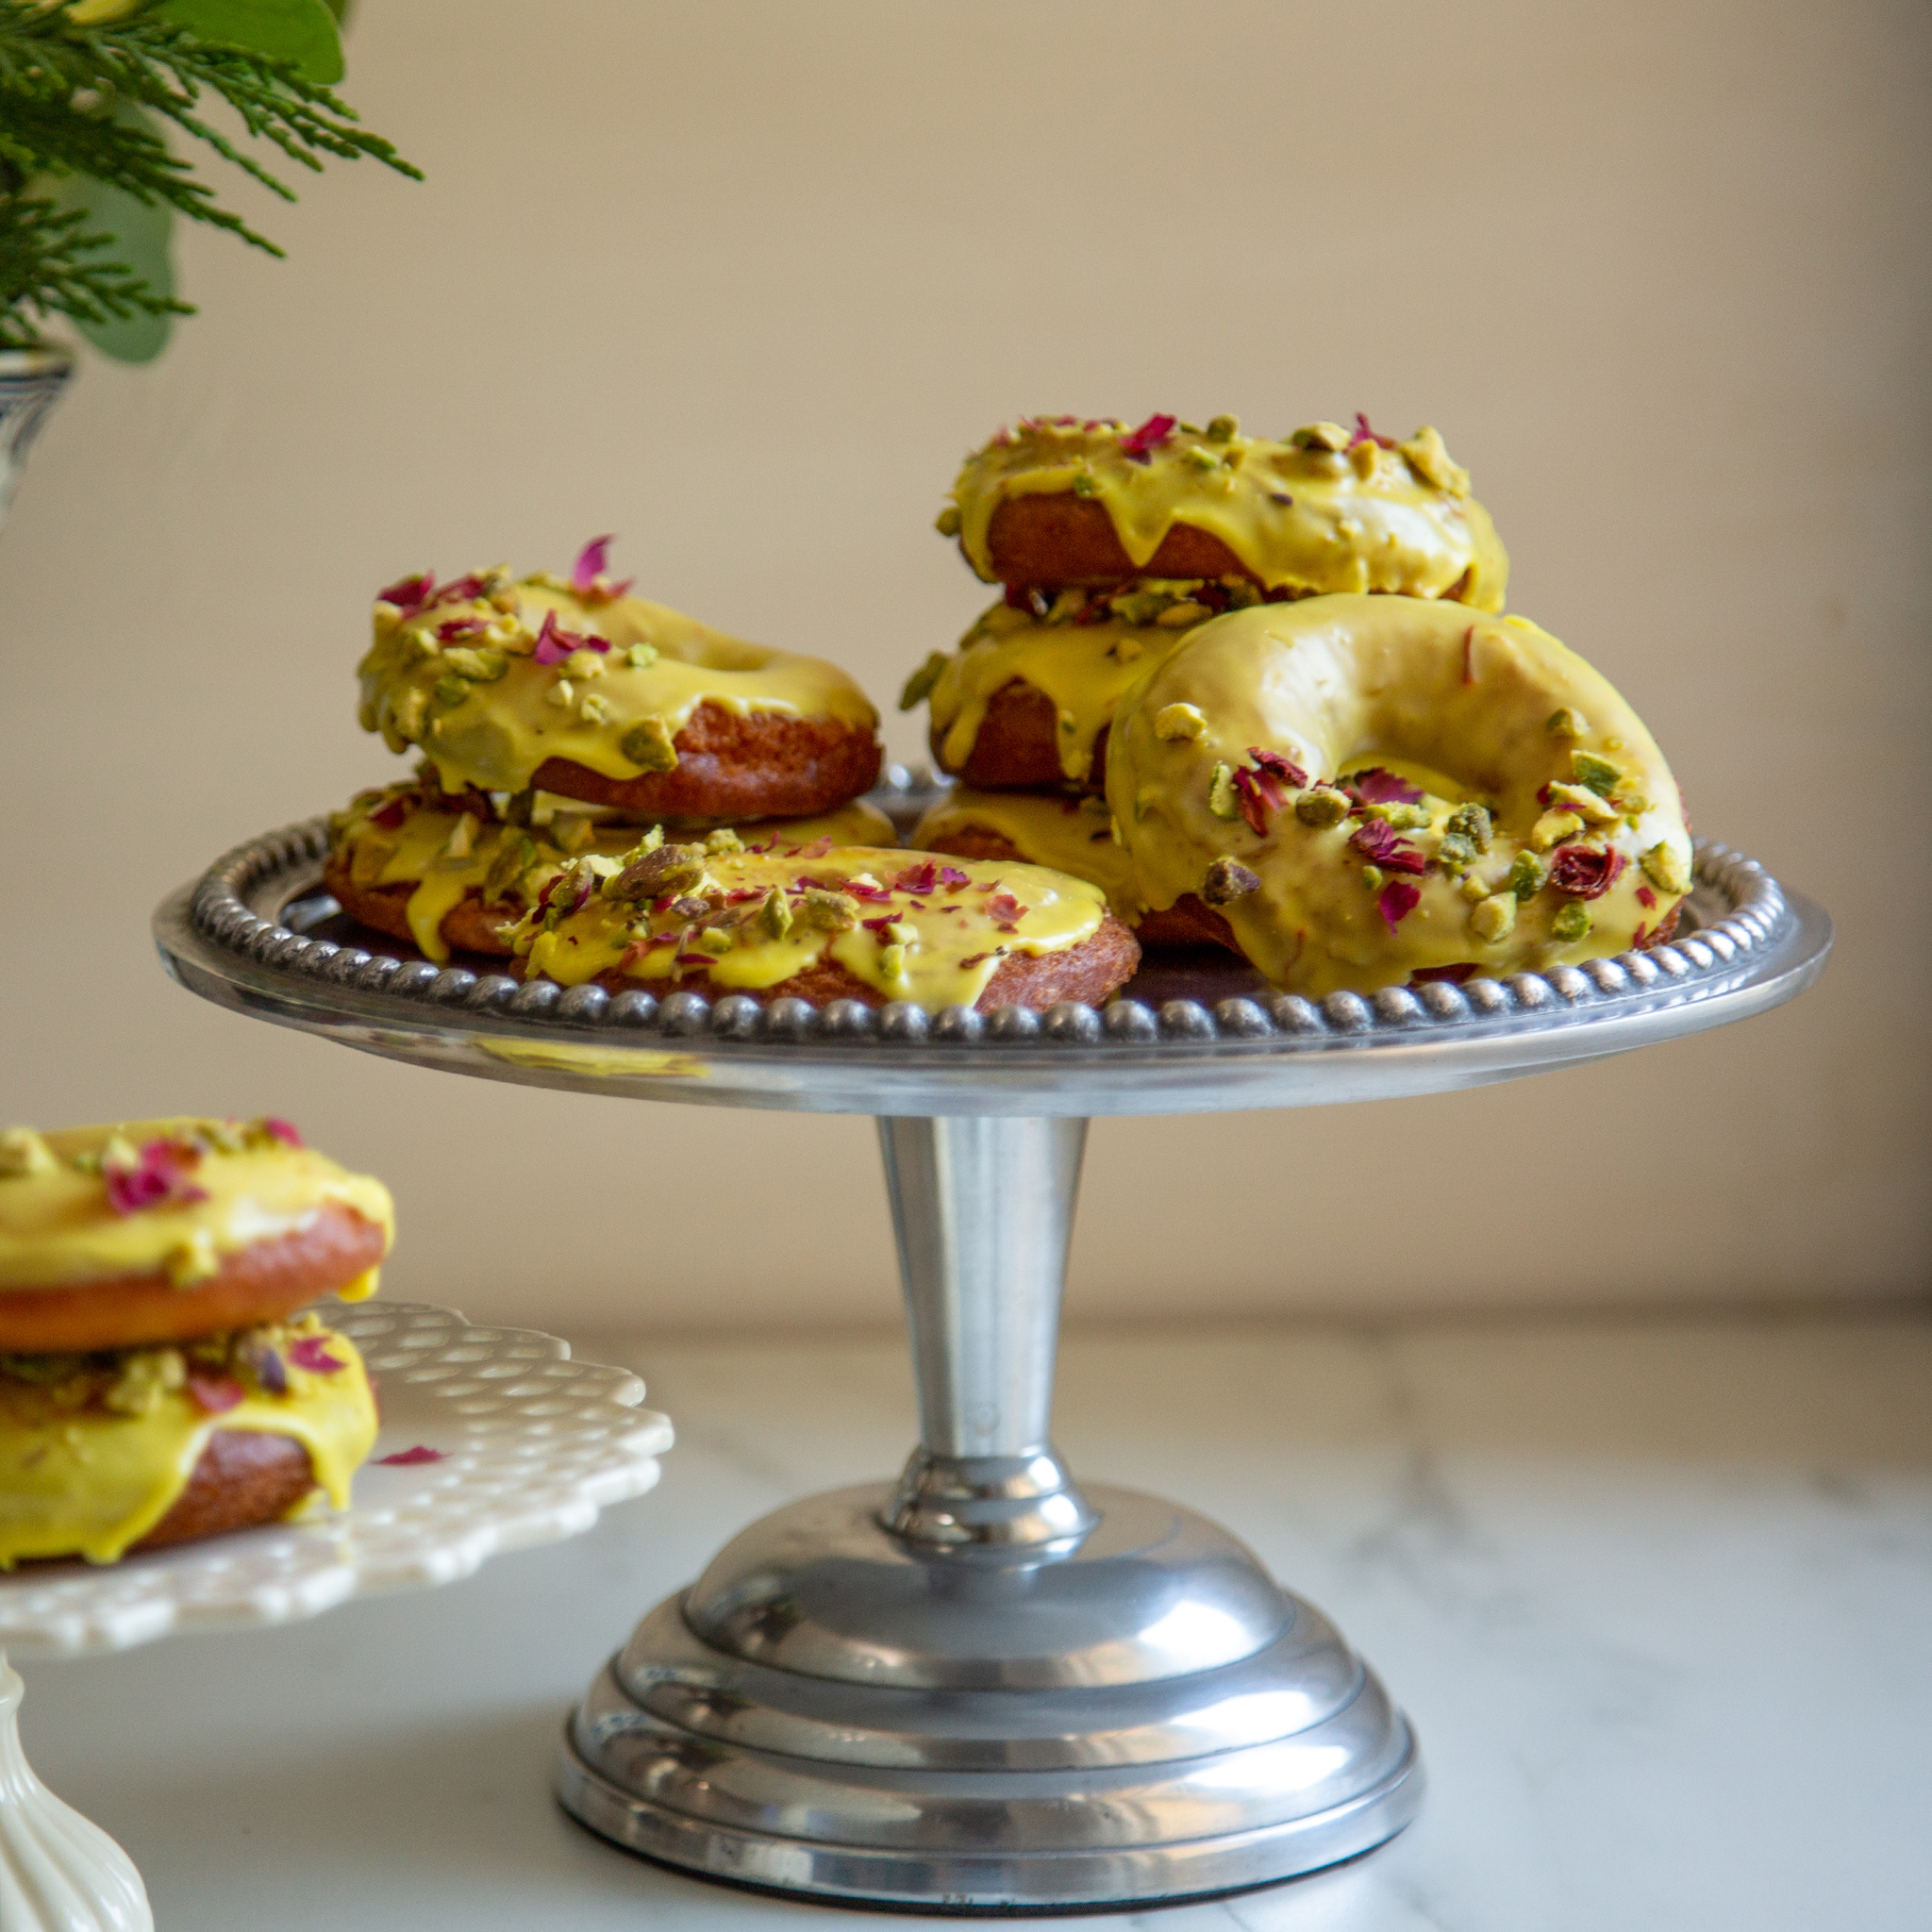 Zoe Francois' Cake Doughnuts with Saffron Glaze